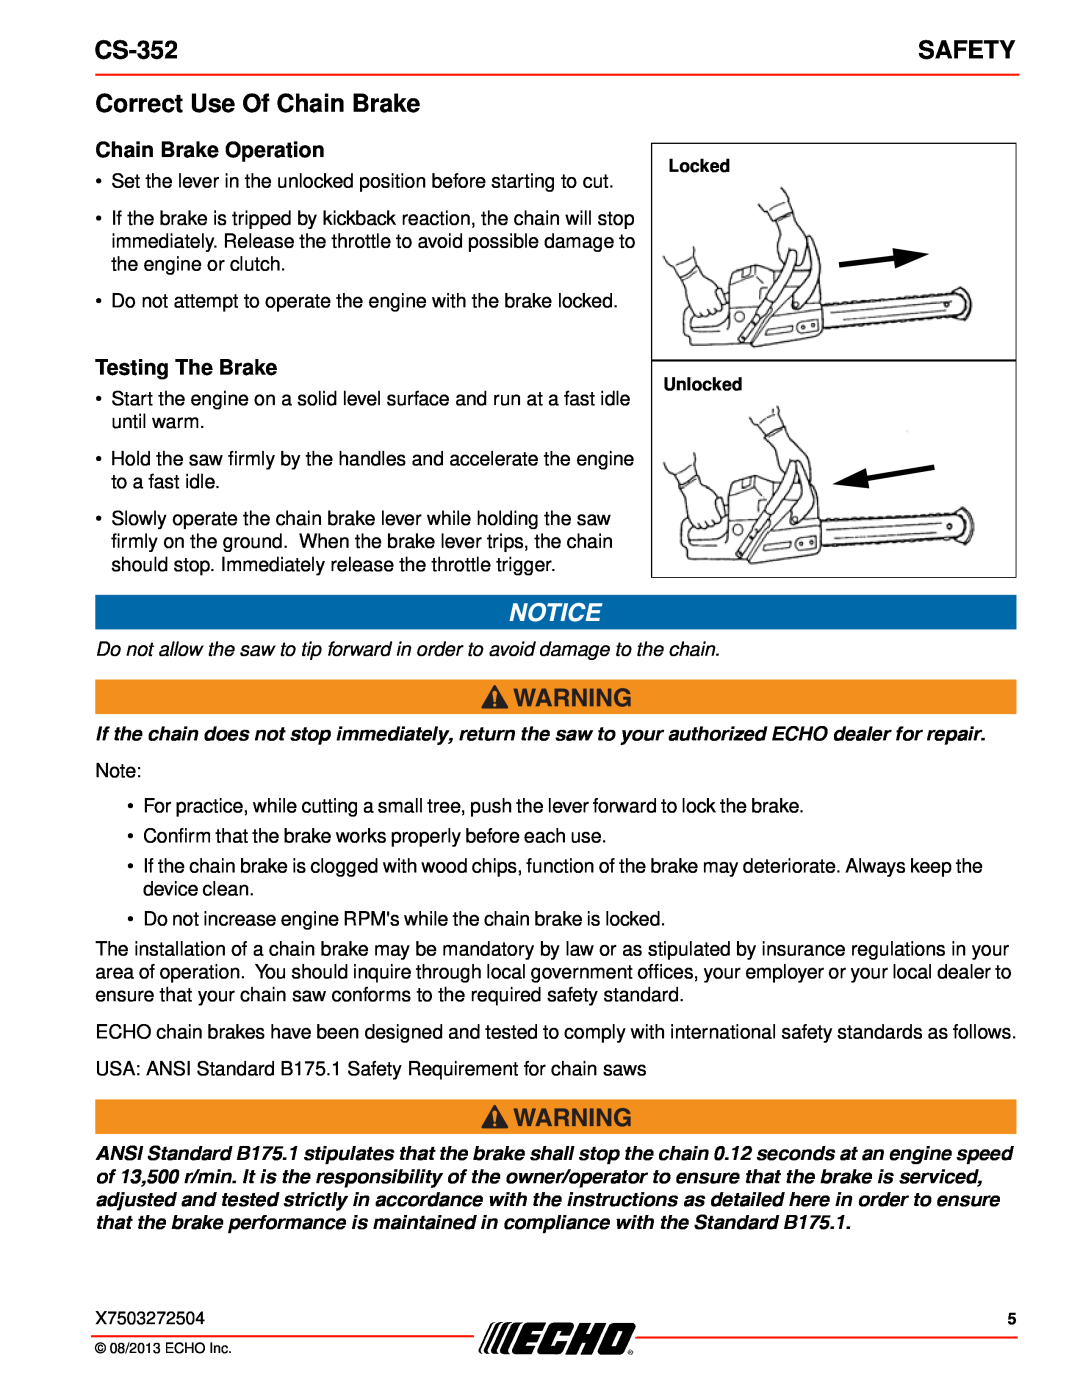 Echo CS-352 instruction manual Correct Use Of Chain Brake, Safety, Chain Brake Operation, Testing The Brake 